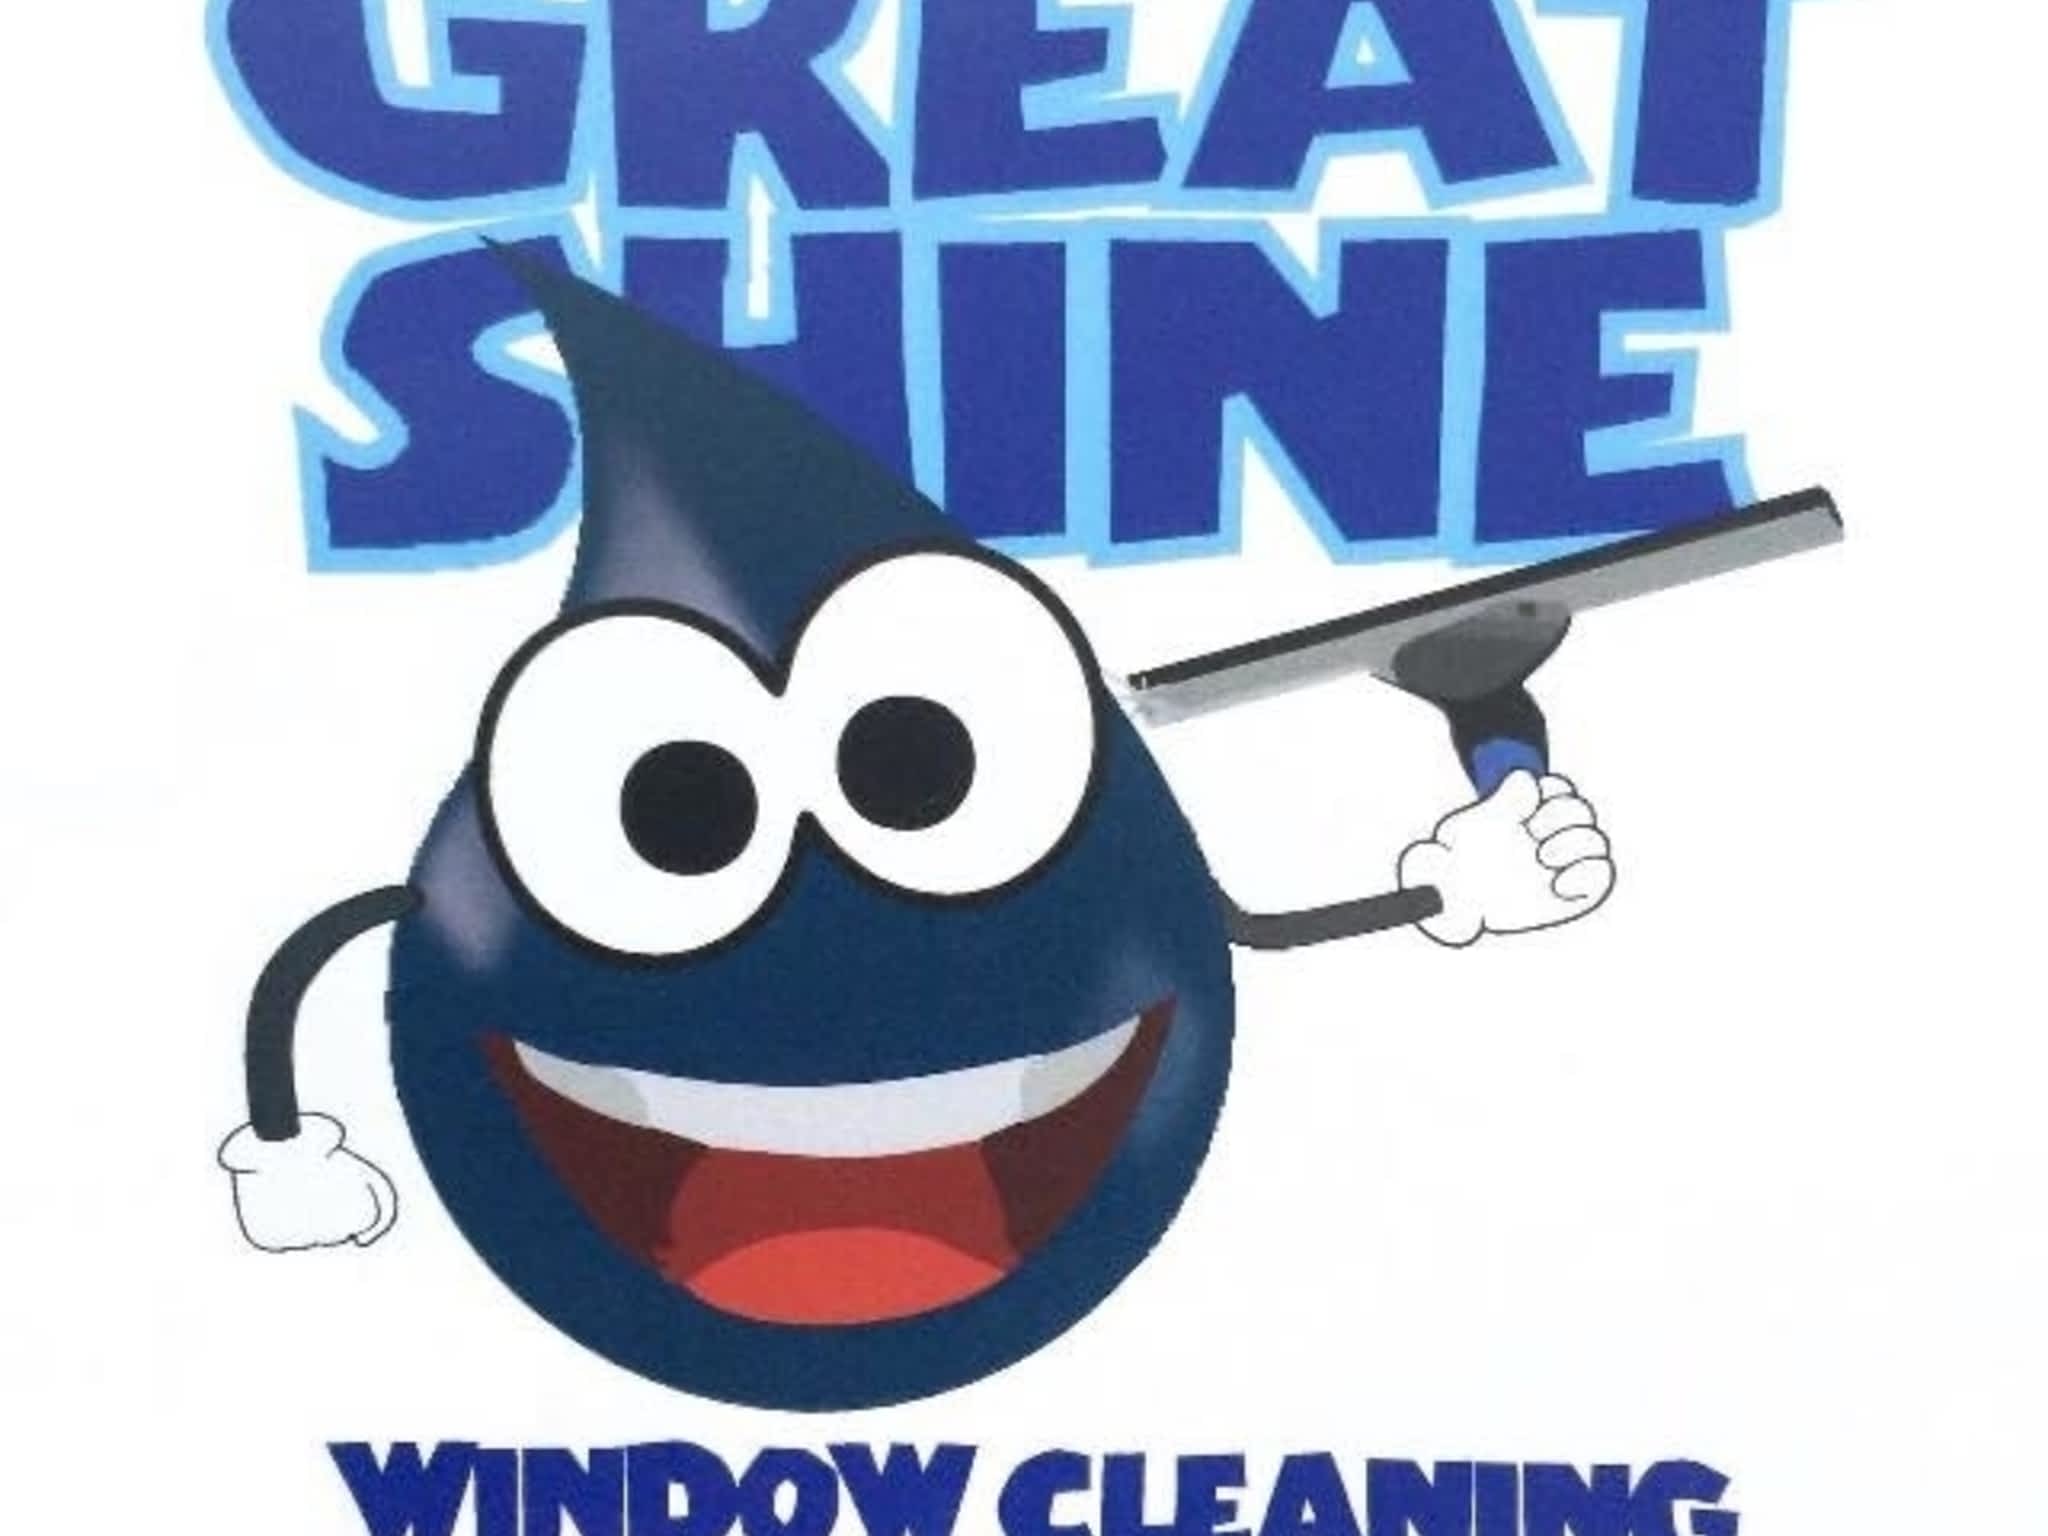 photo Great Shine Window Cleaning